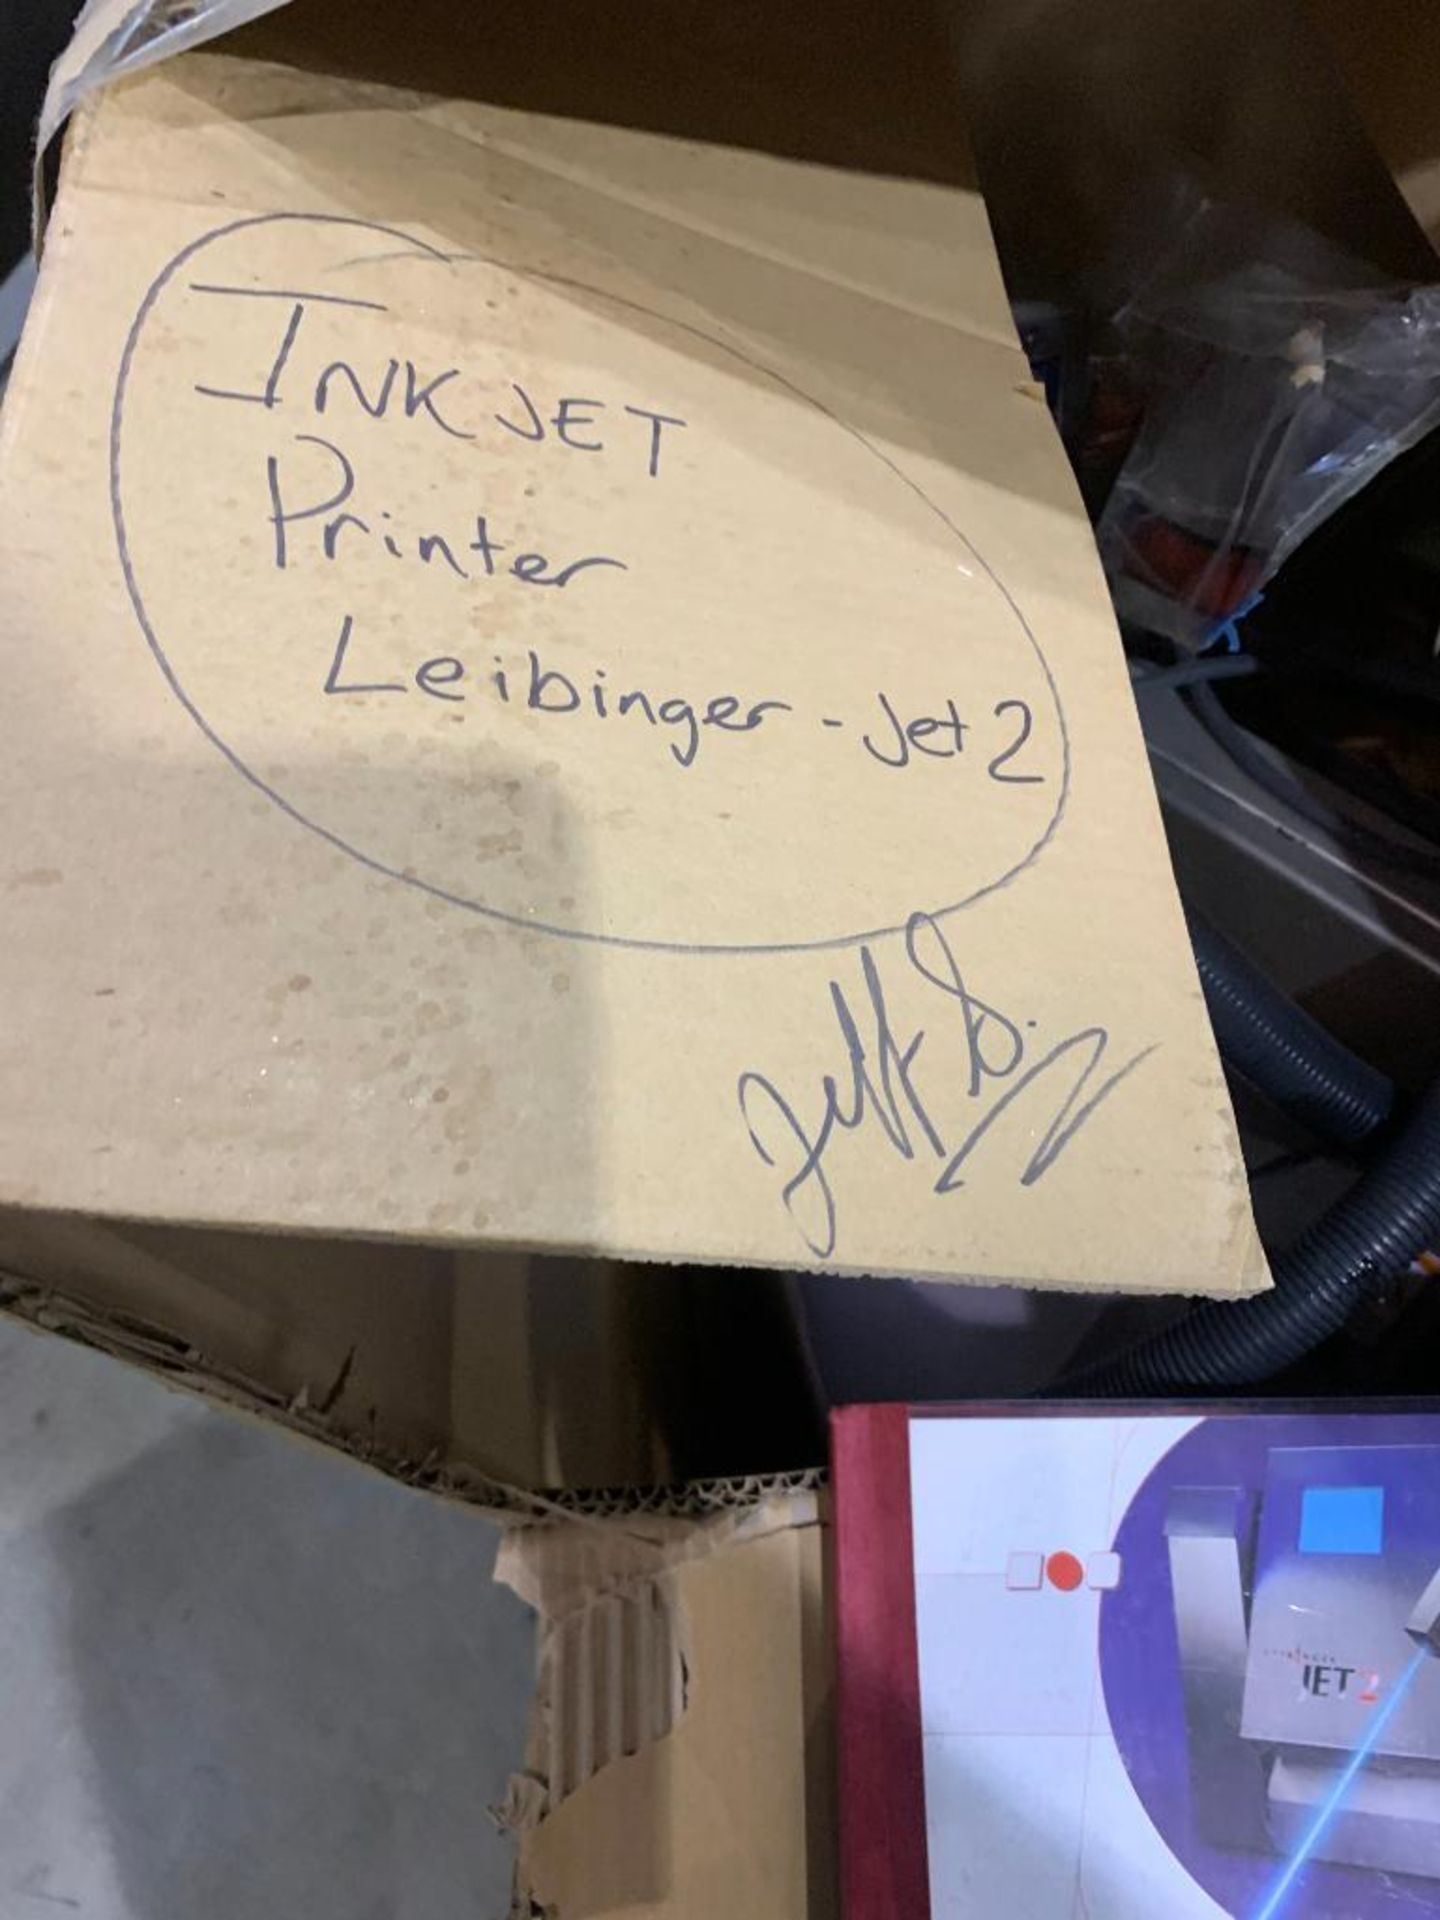 Leibinger - Jet 2 ink jet printer - Image 3 of 4